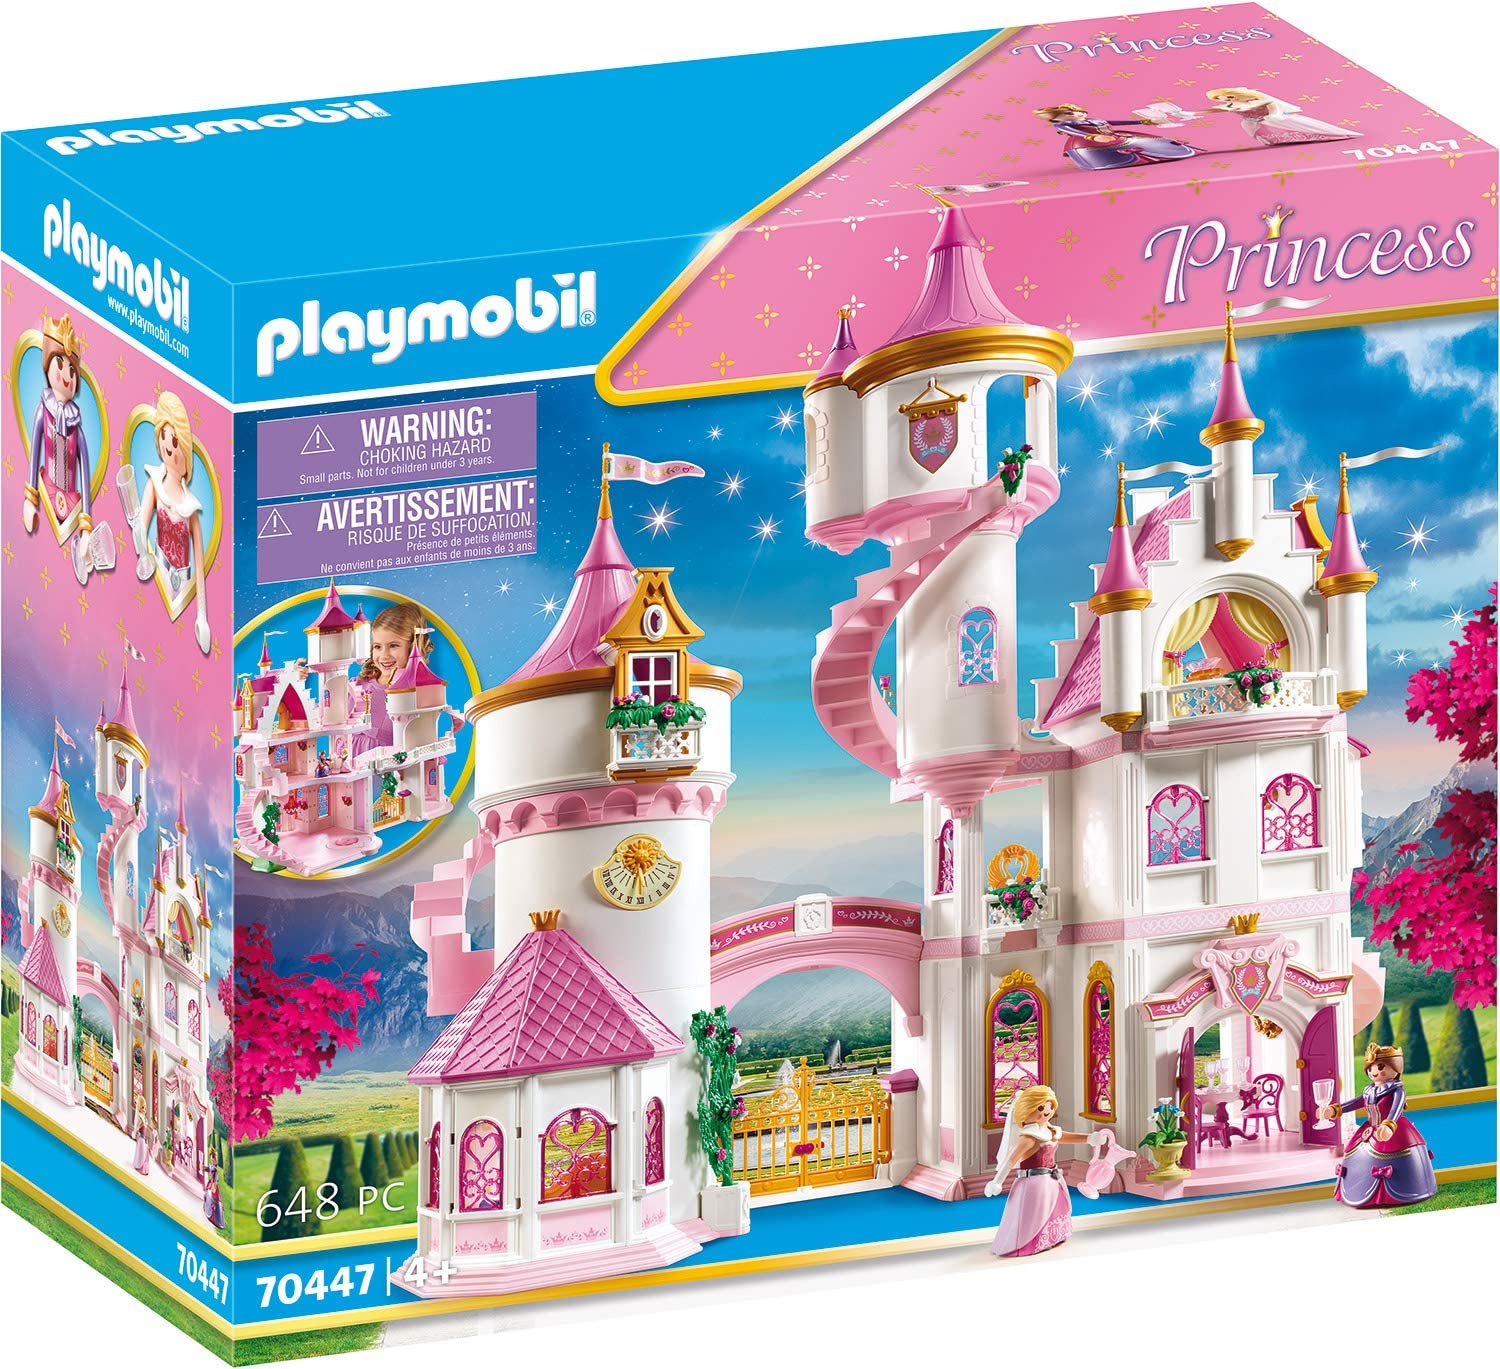 Playmobil Princess 70447 Large Princess Castle With Rotating Dance Plate, F